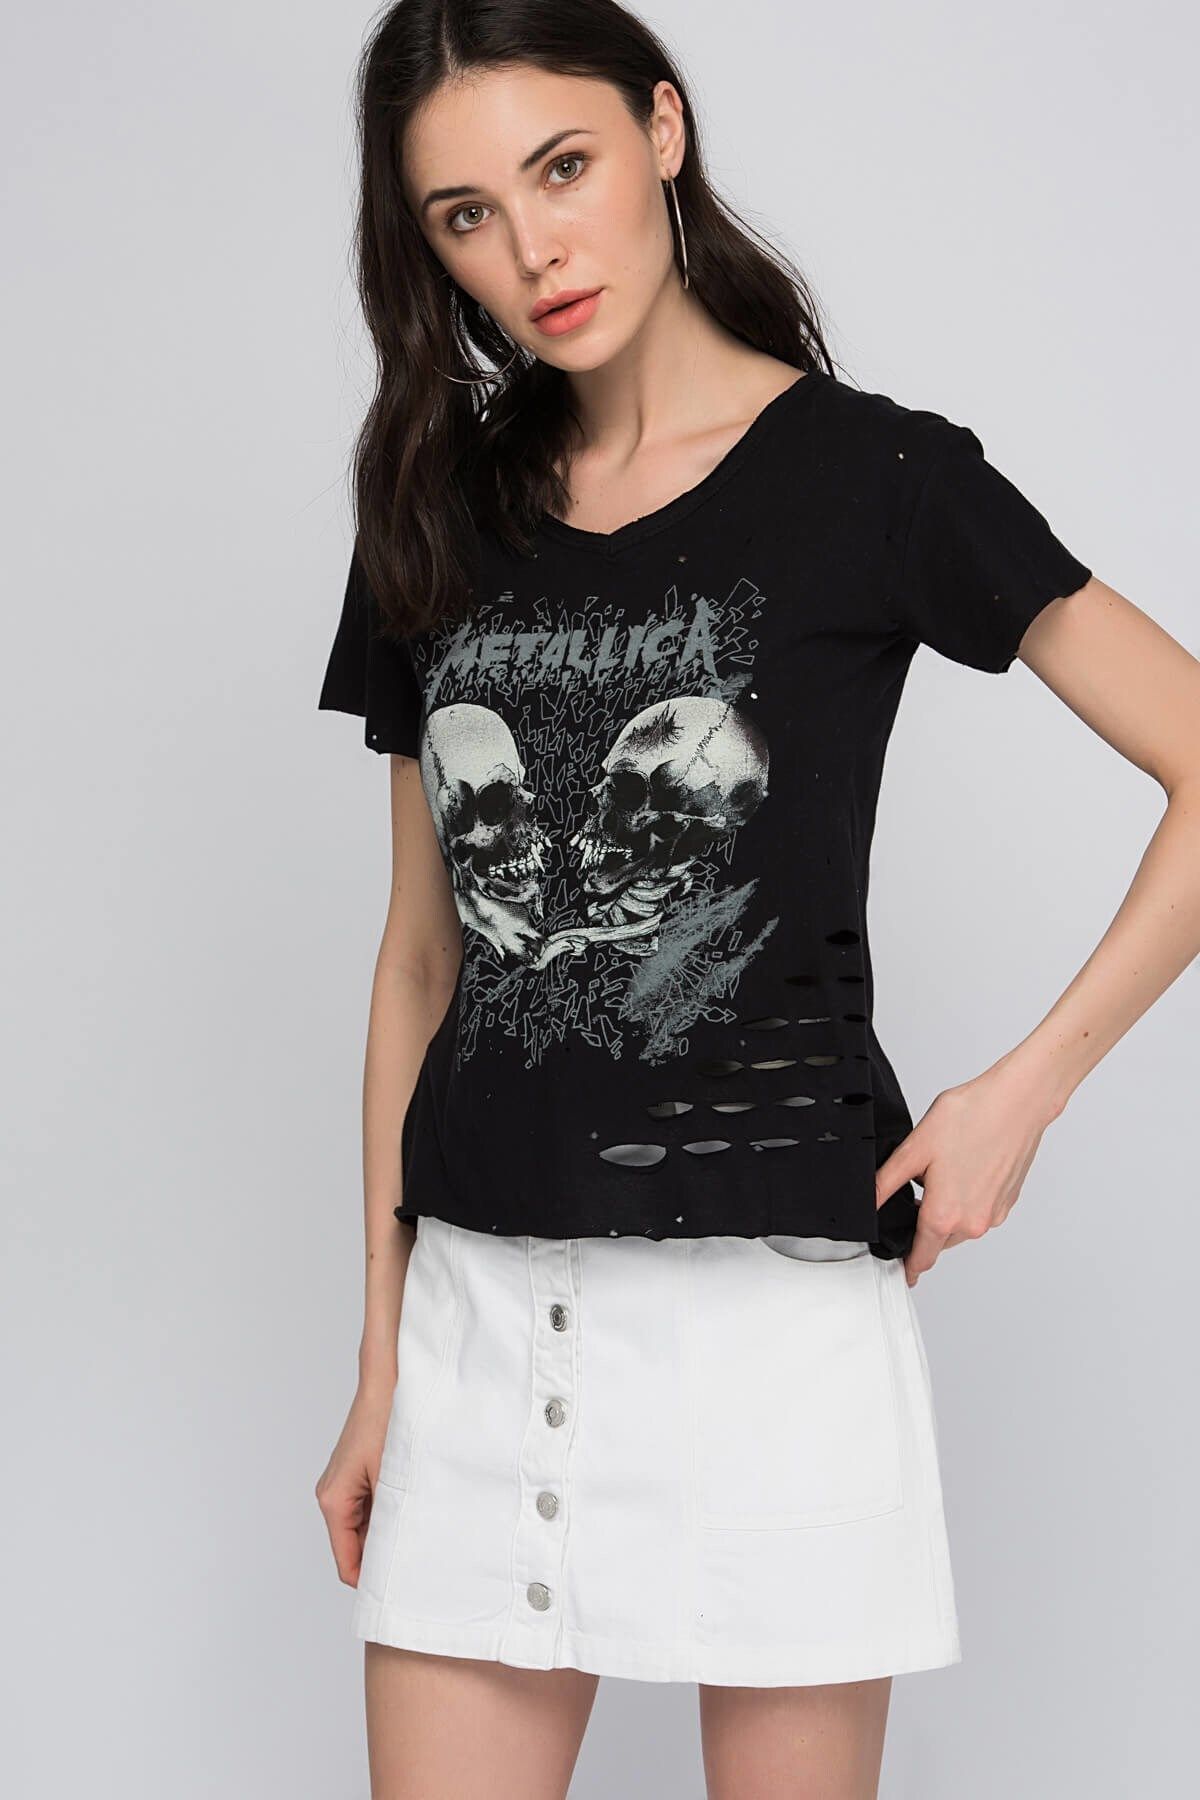 Cotton Mood 8151501 V Yaka Kurukafa Baskılı Lazer Kesimli T.shirt Sıyah